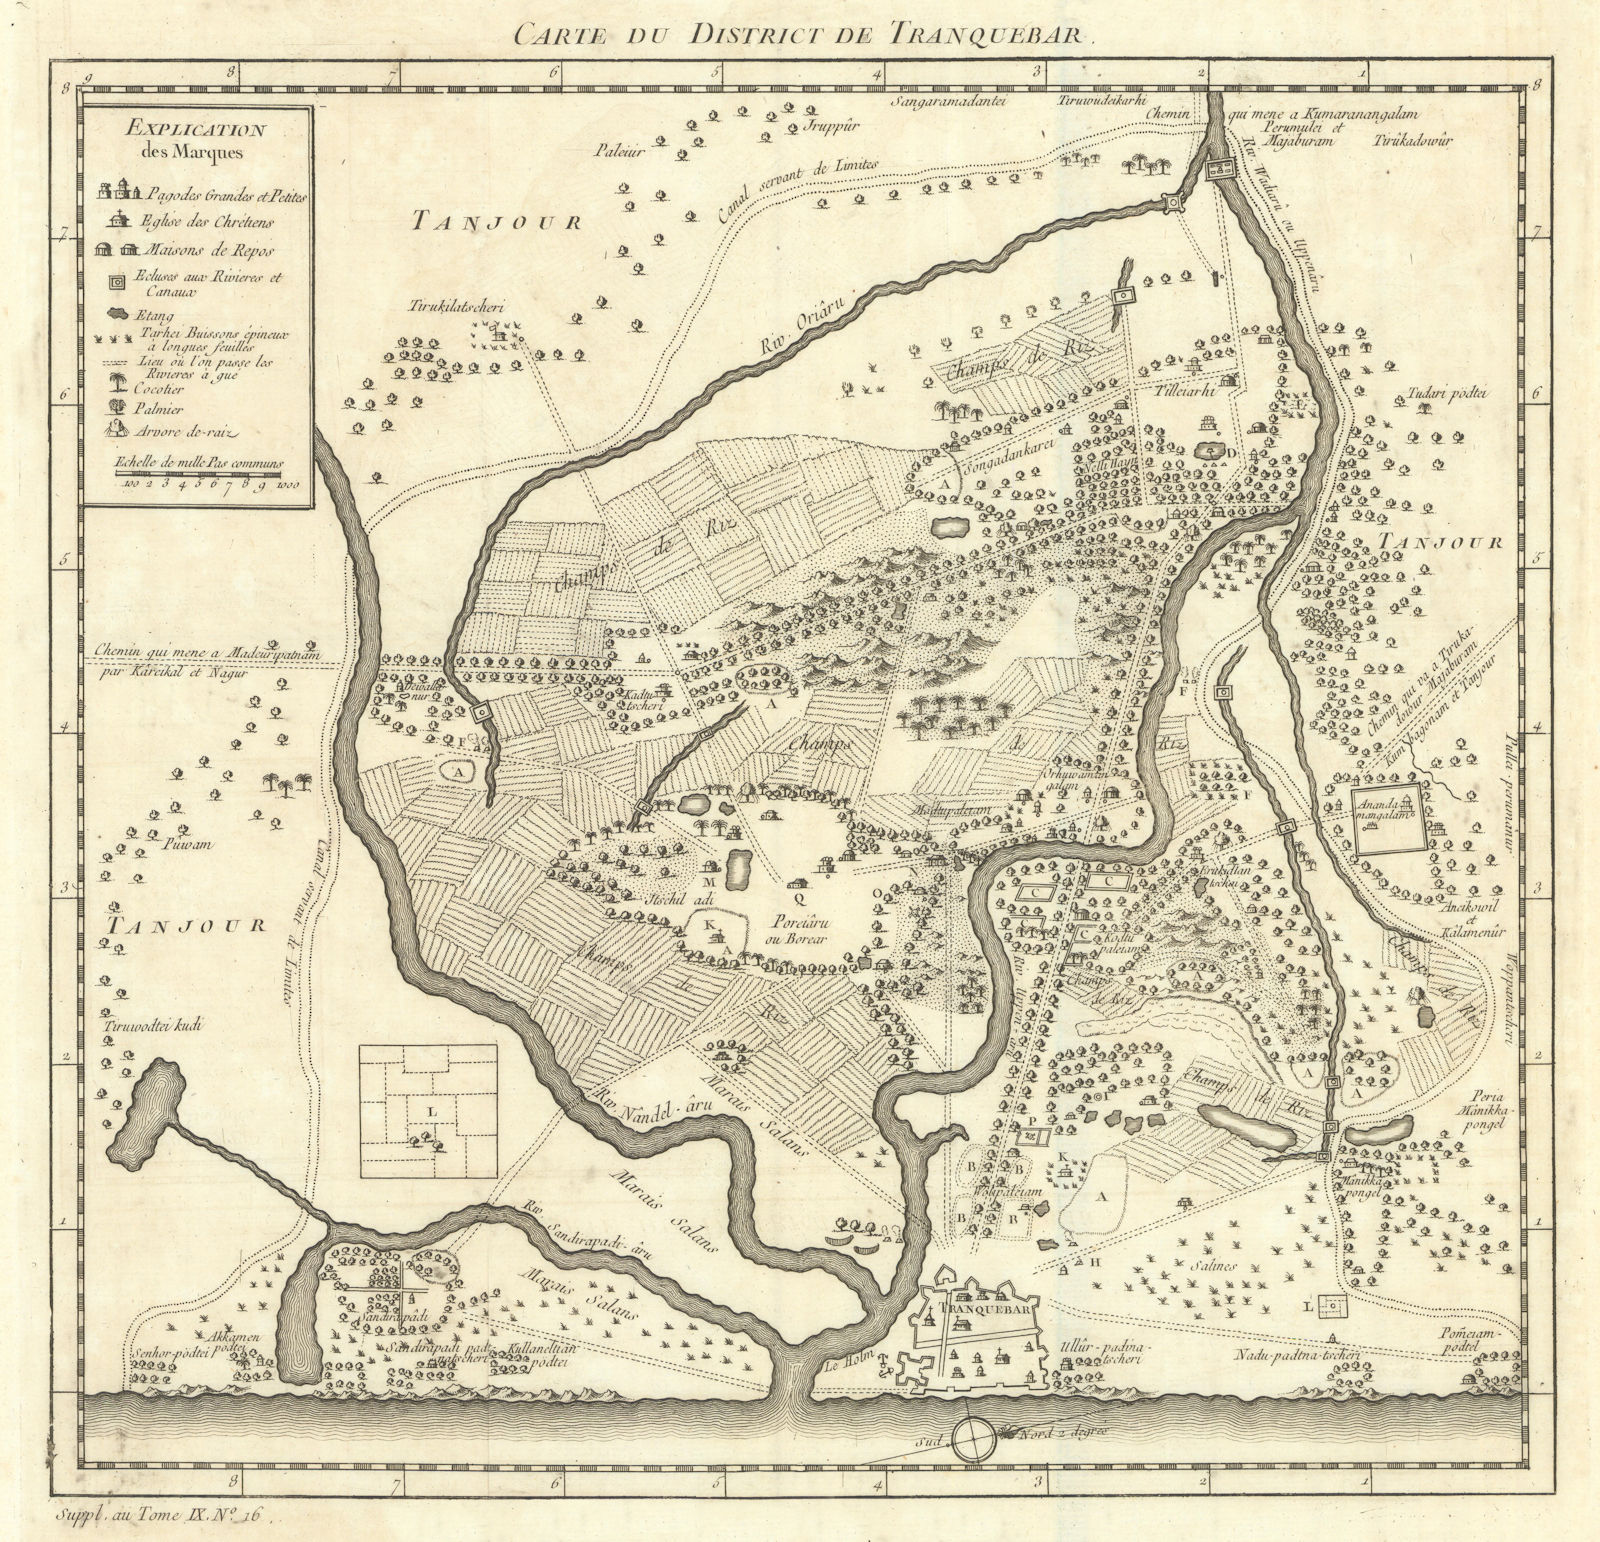 'Carte du District de Tranquebar'. Tharangambadi, Tamil Nadu. BELLIN 1761 map